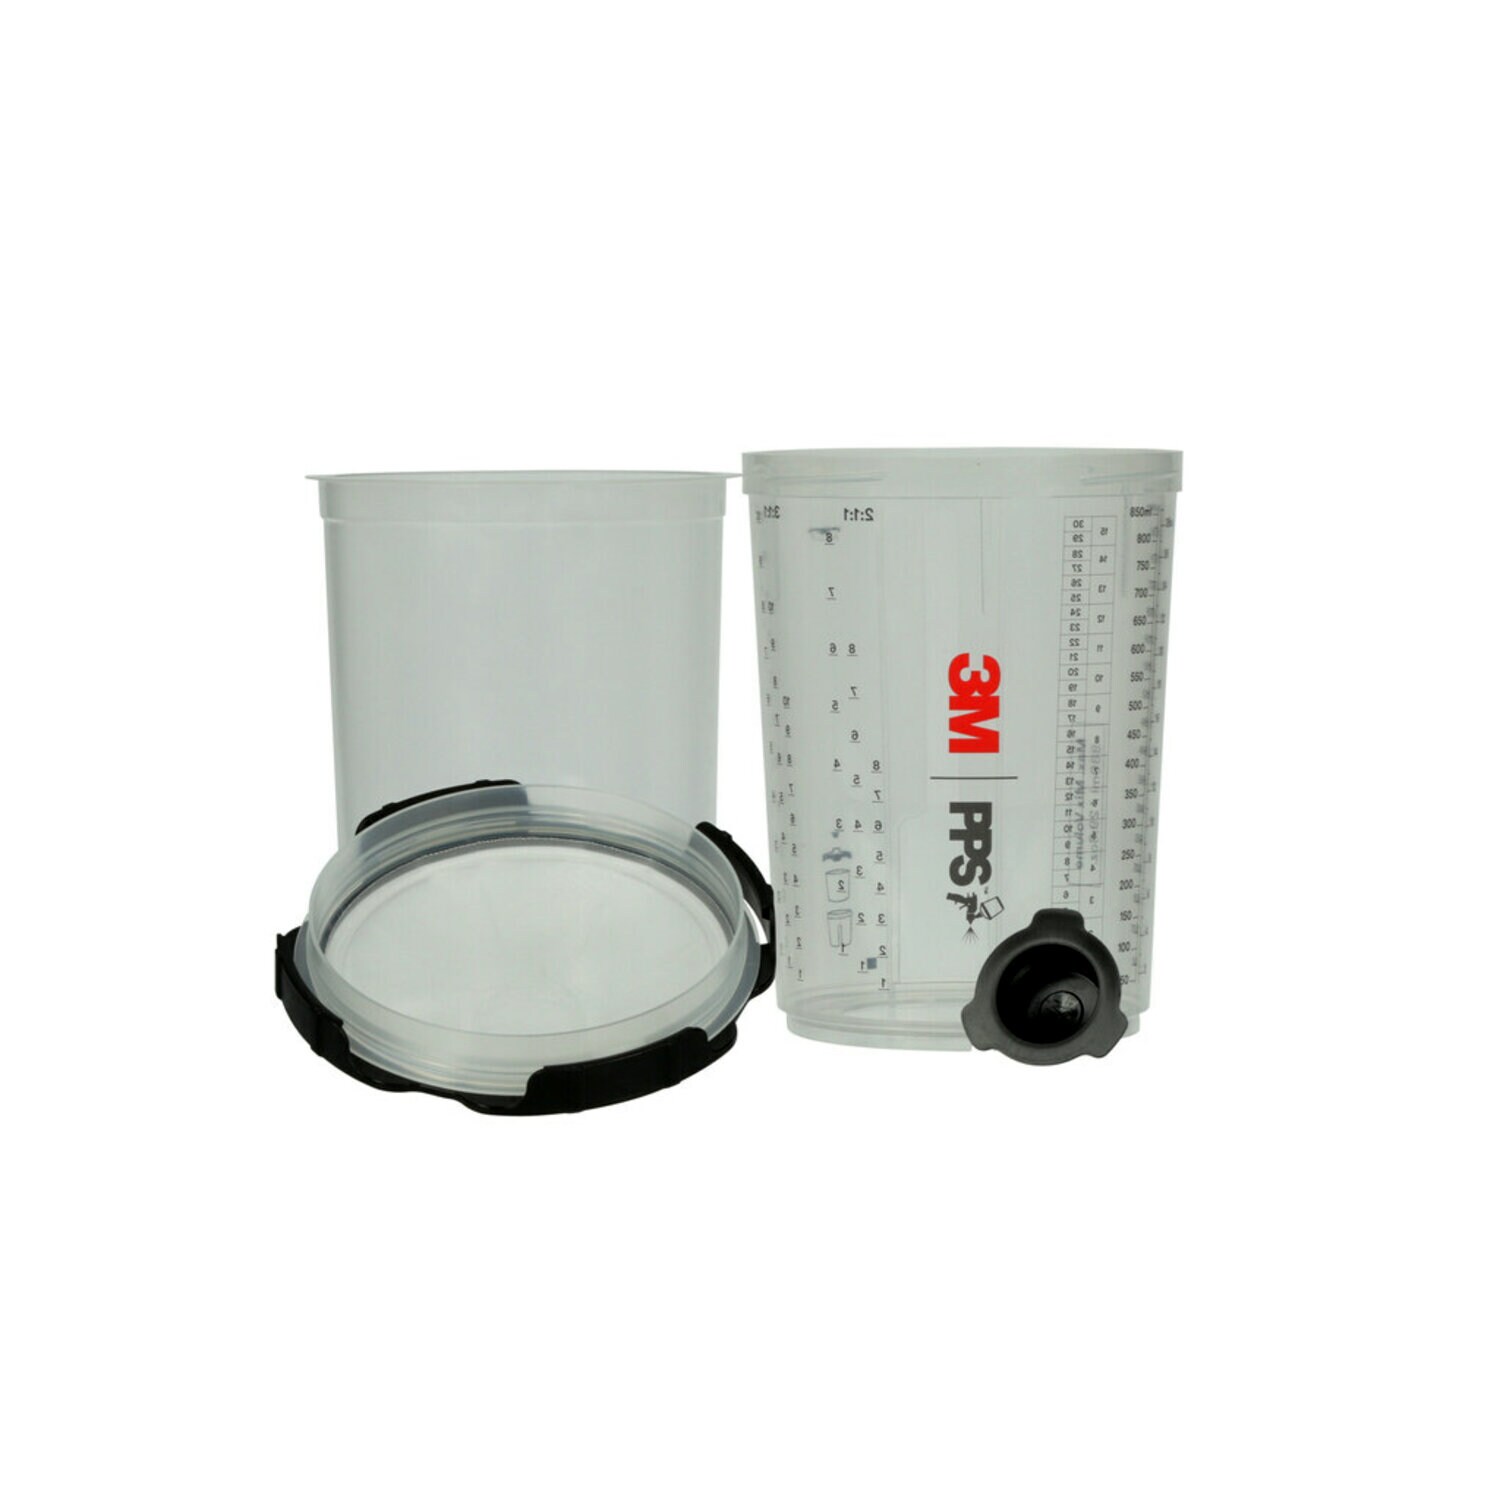 7100297030 - 3M PPS Series 2.0 Spray Cup System Kit 26024, Large (28 fl oz, 850 mL), 200 Micron Filter, 1 Kit/Case